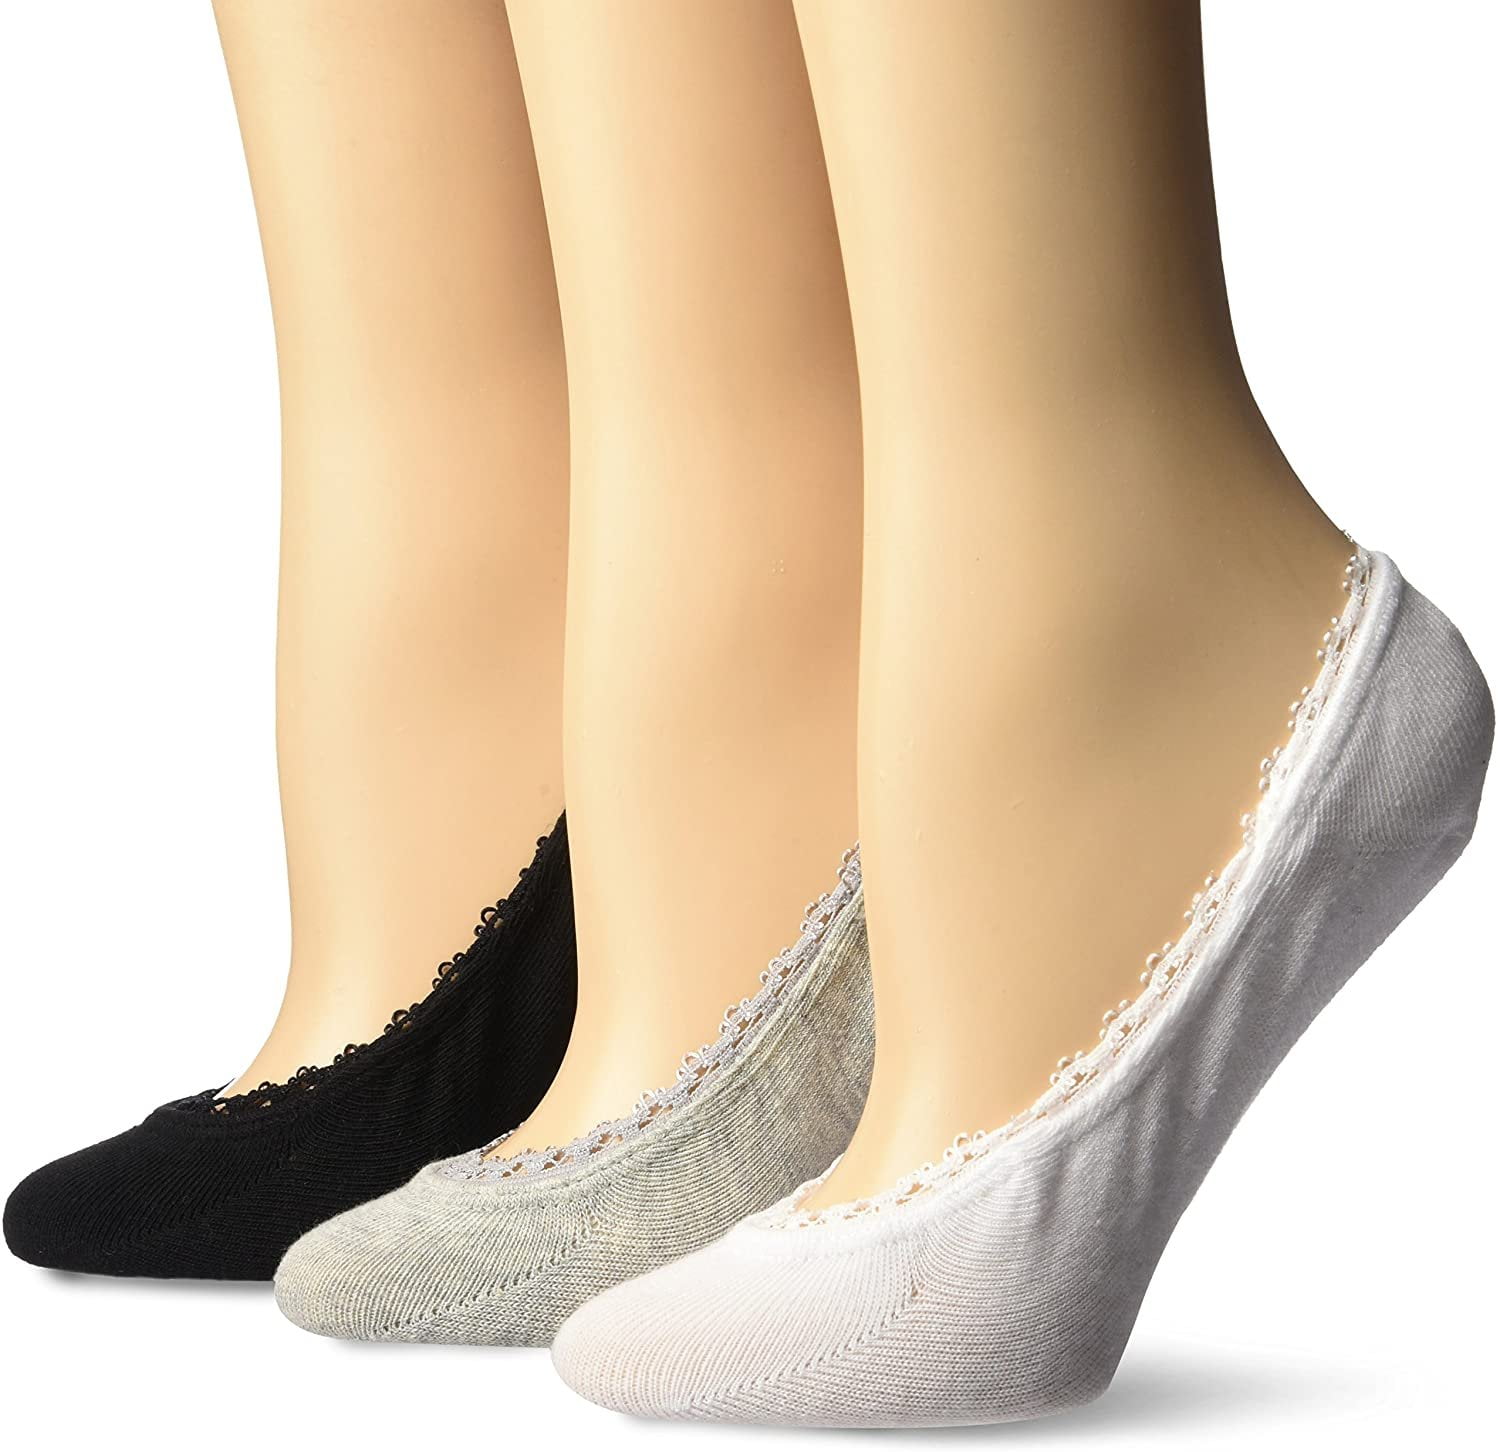 Women's Decorative No Show Socks  Set Of Three  Shoe Size 4-10 Brand New